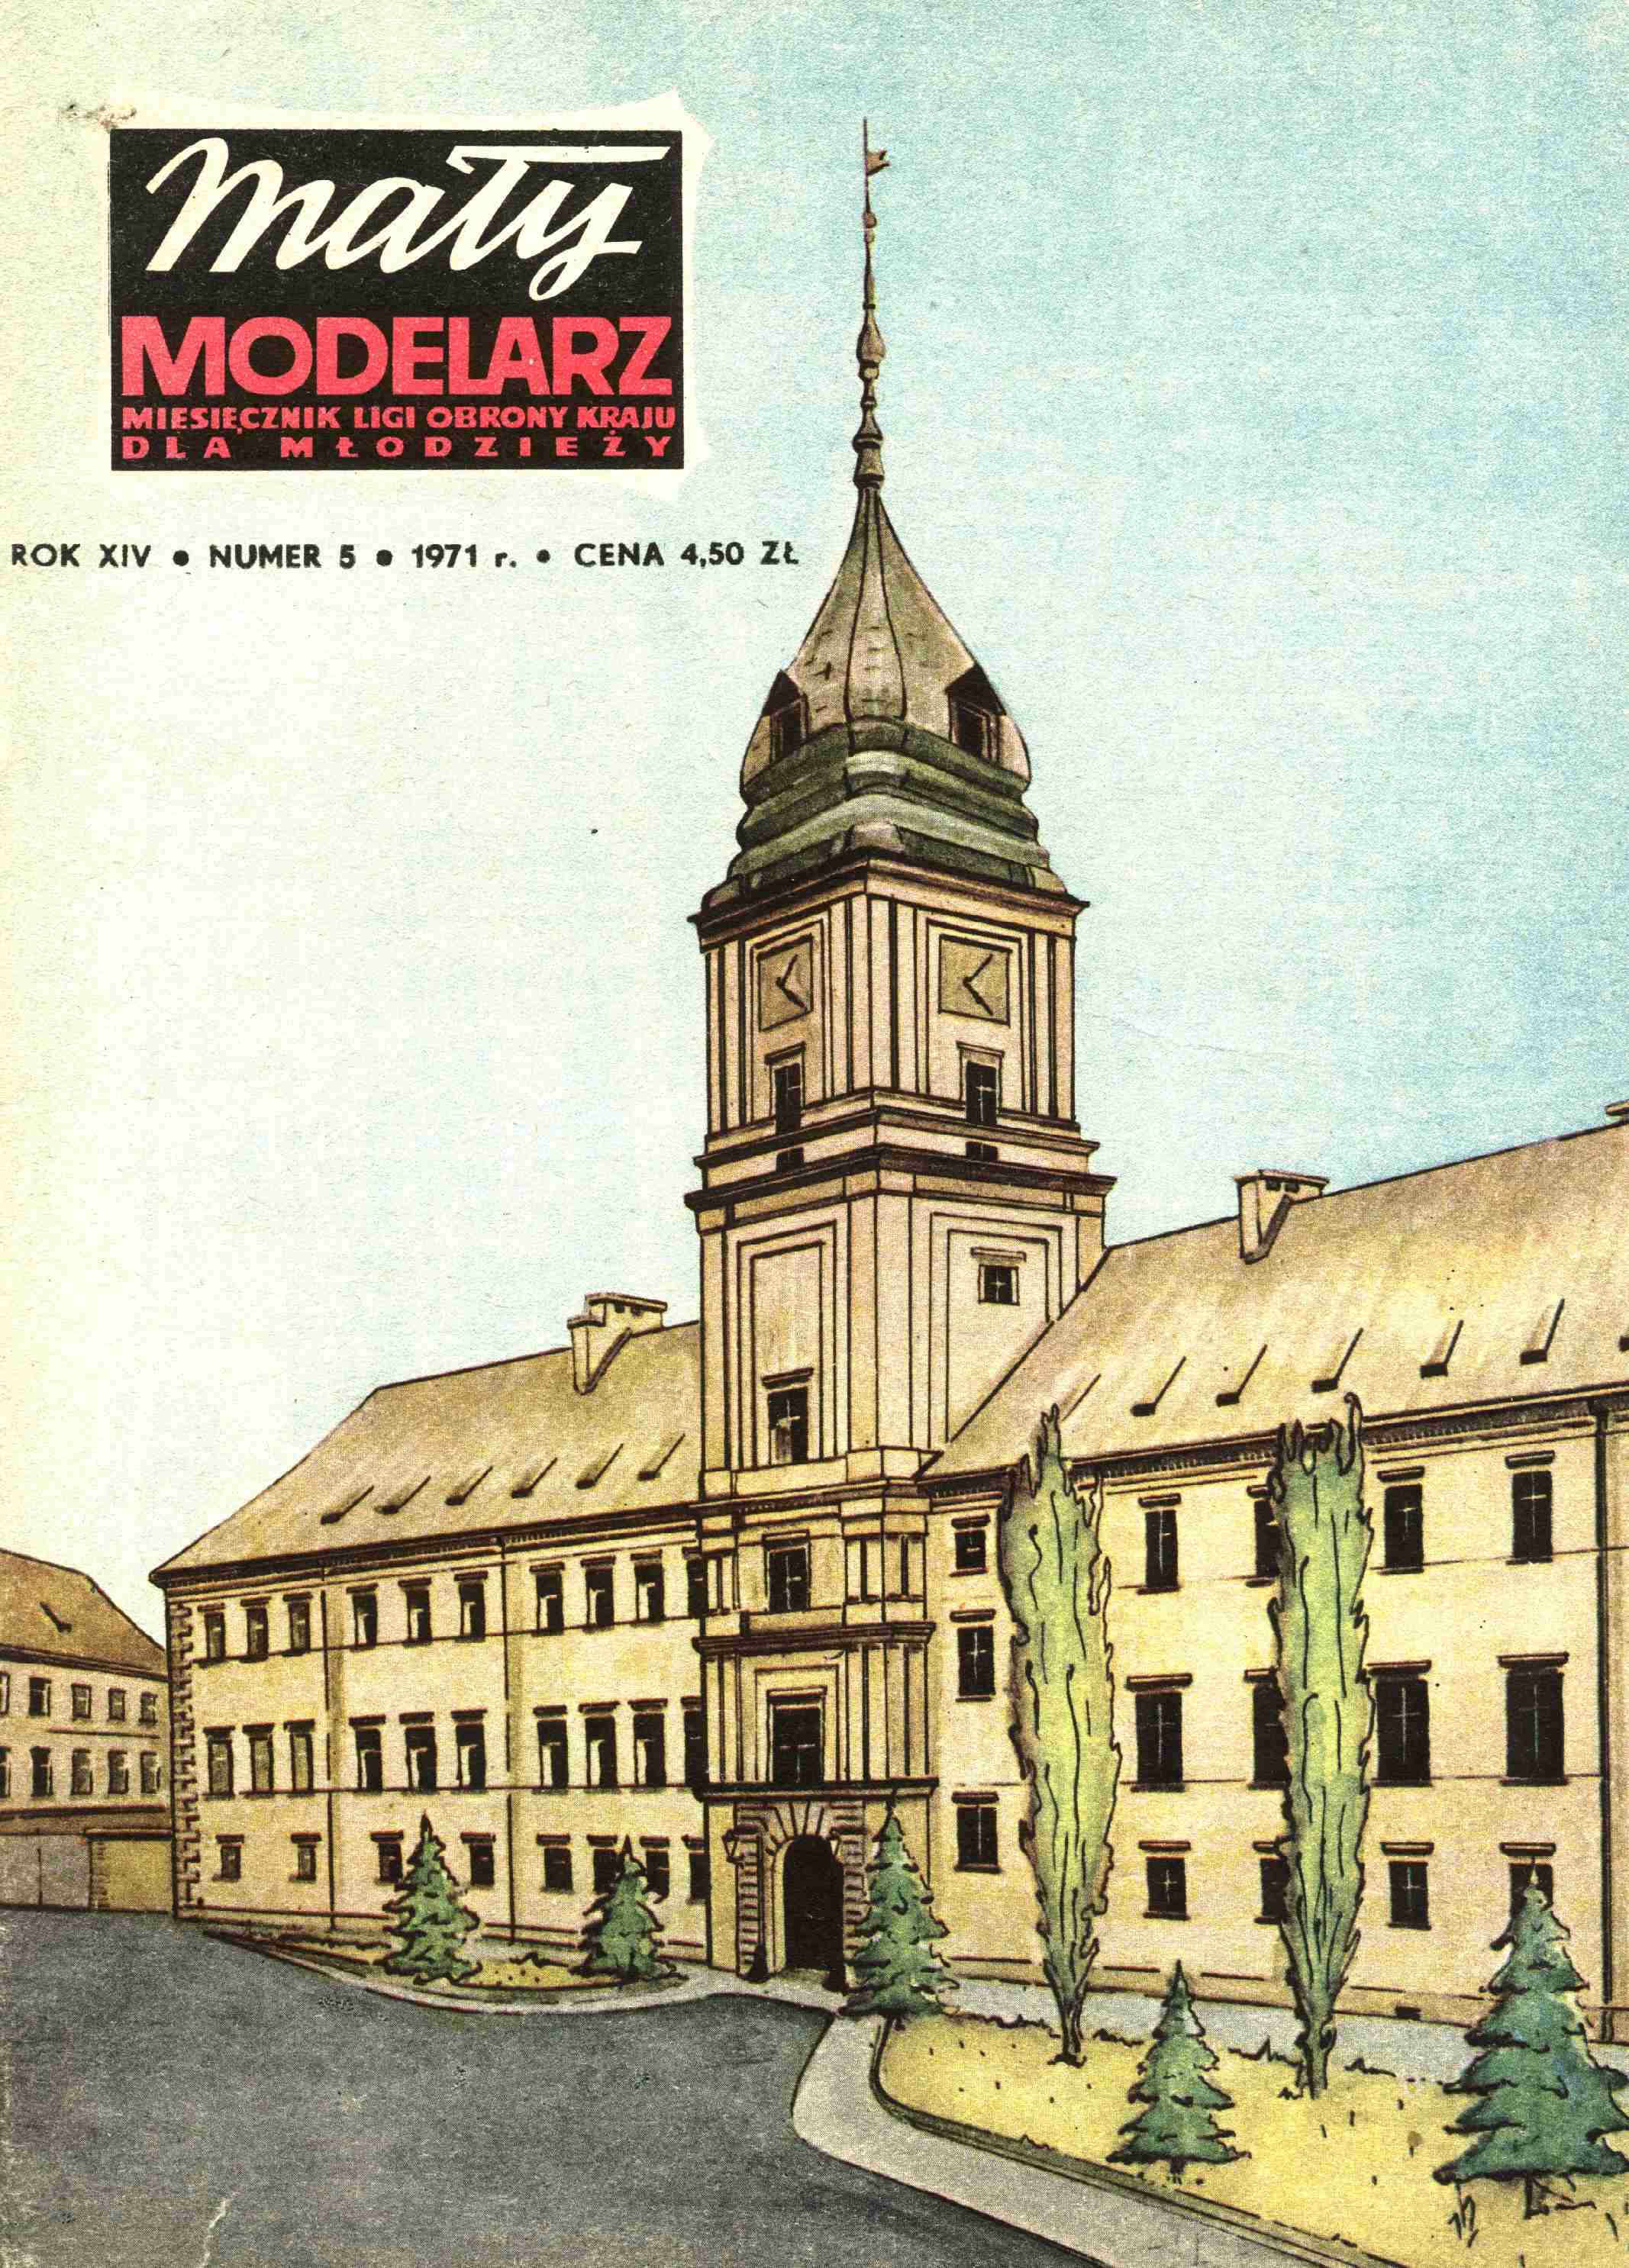 "Maly Modelarz" 5, 1971